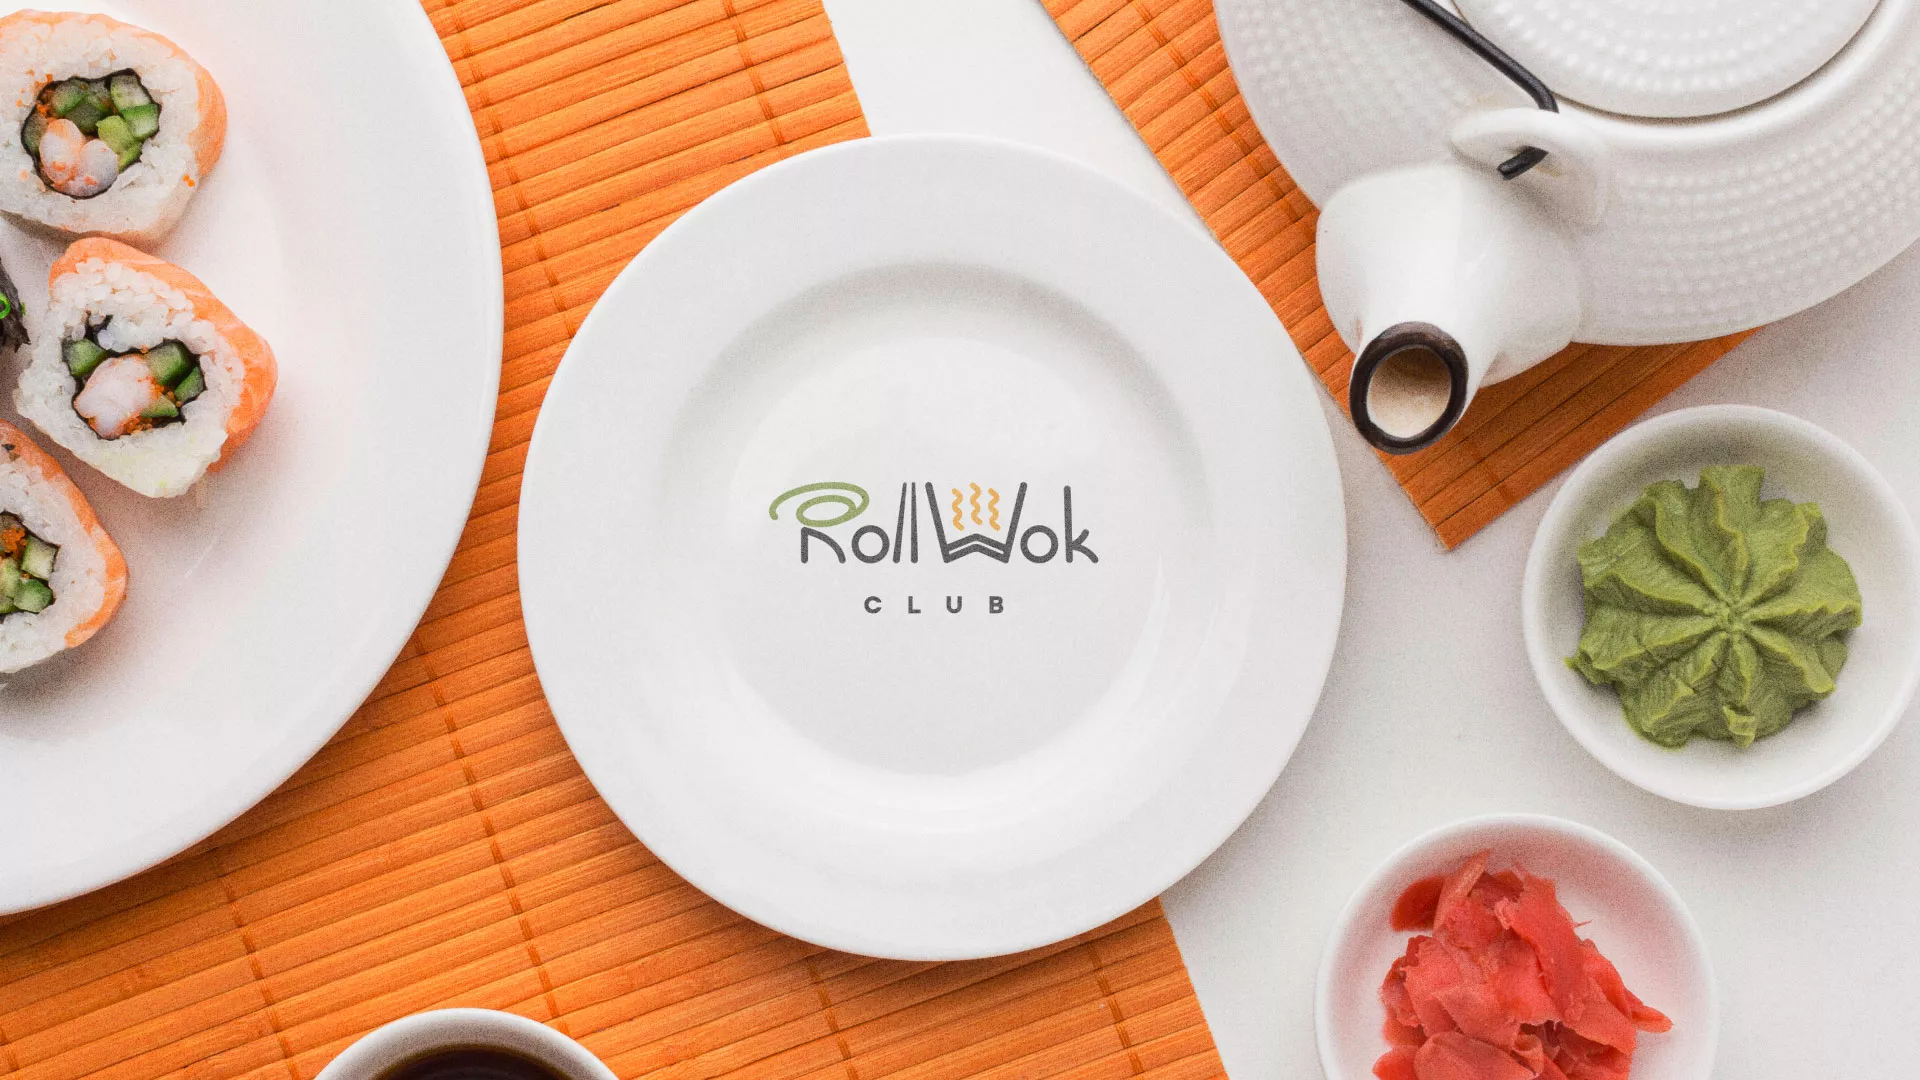 Разработка логотипа и фирменного стиля суши-бара «Roll Wok Club» в Харабалях